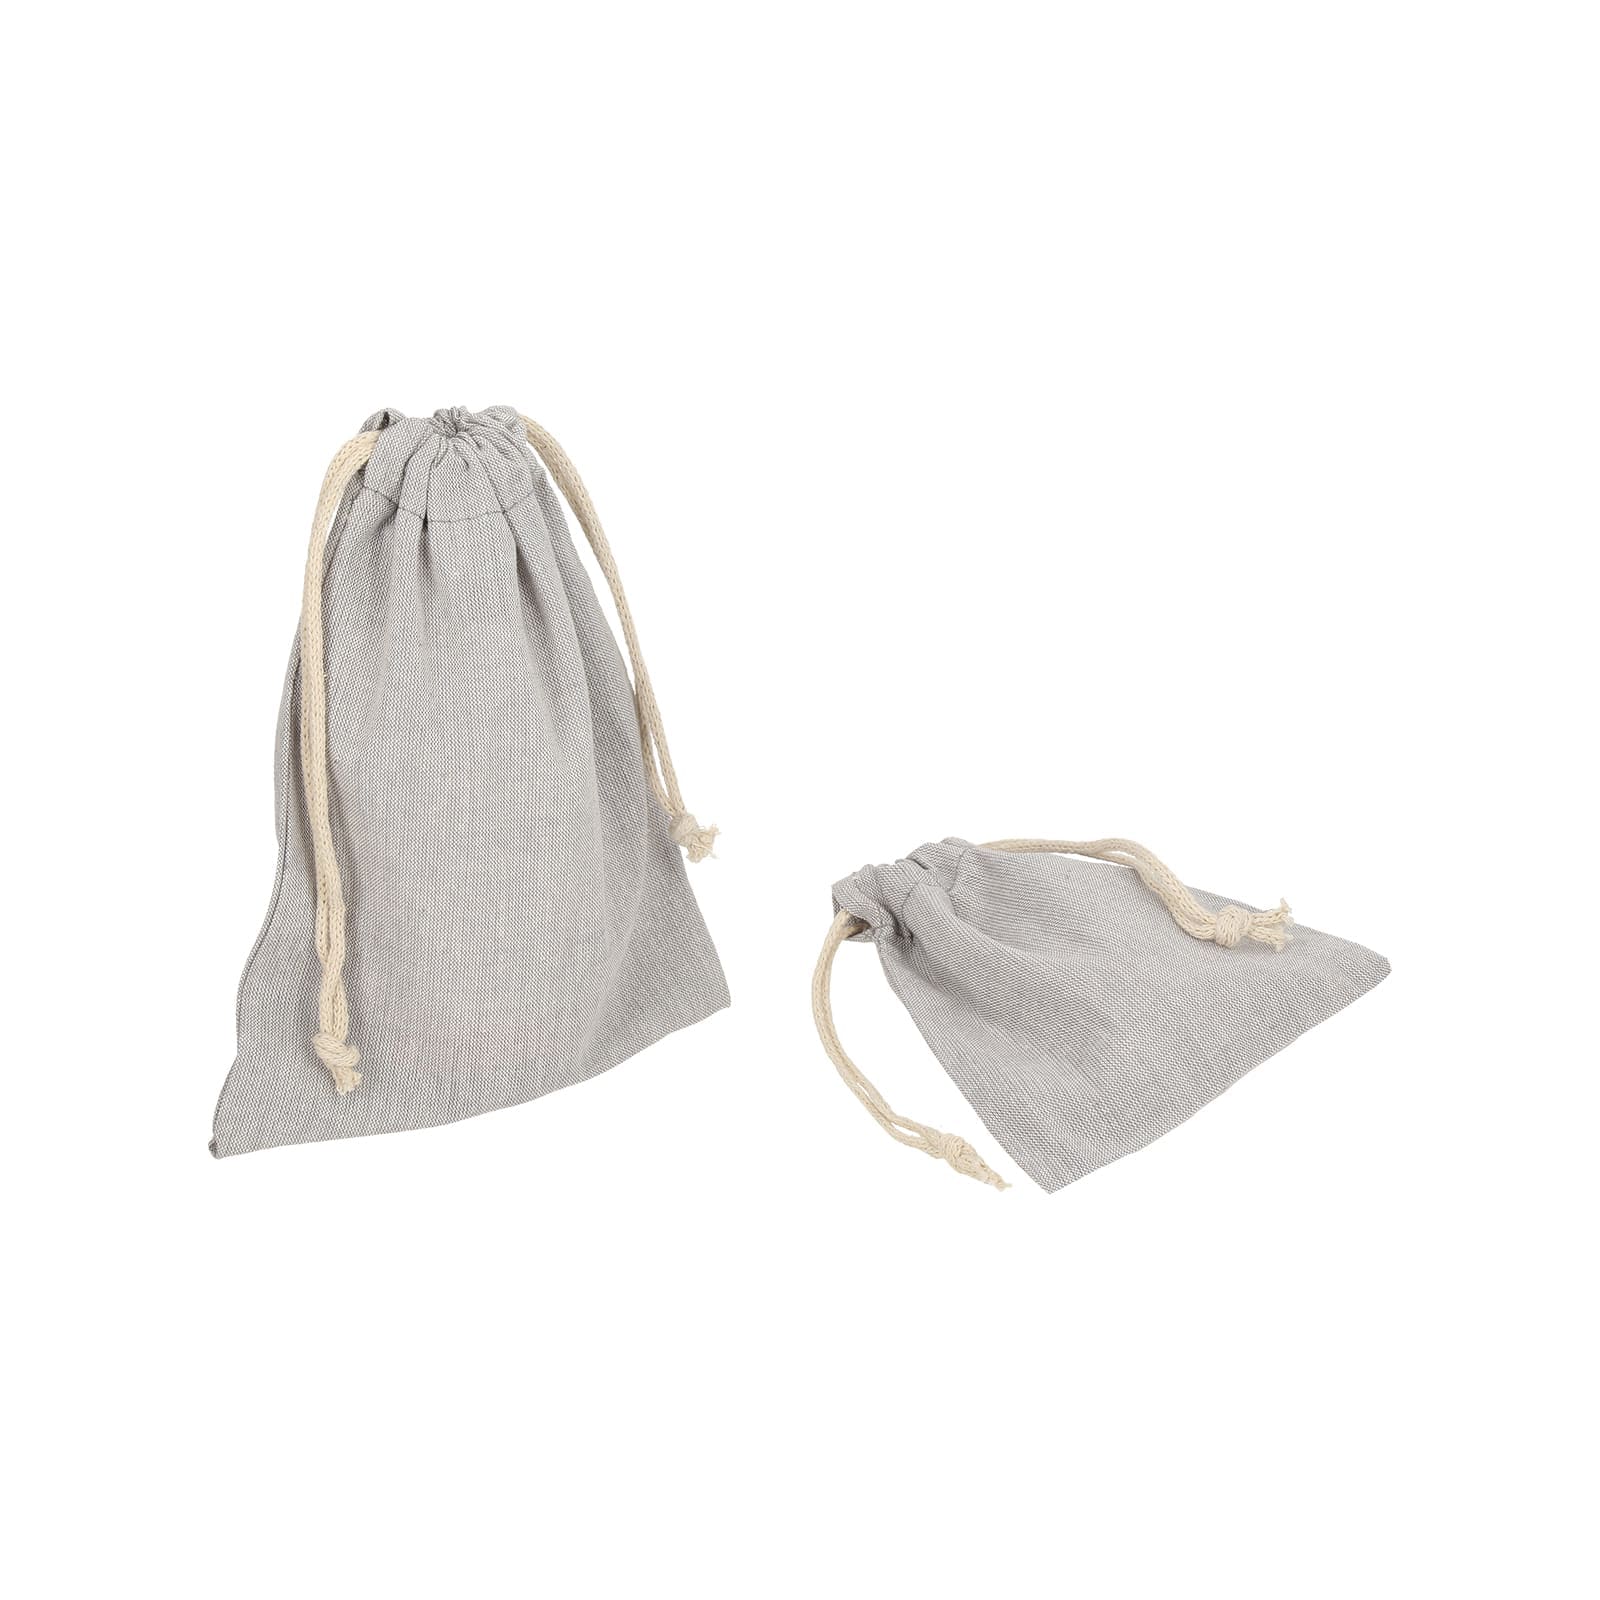 Gray recycled cotton drawstring bag